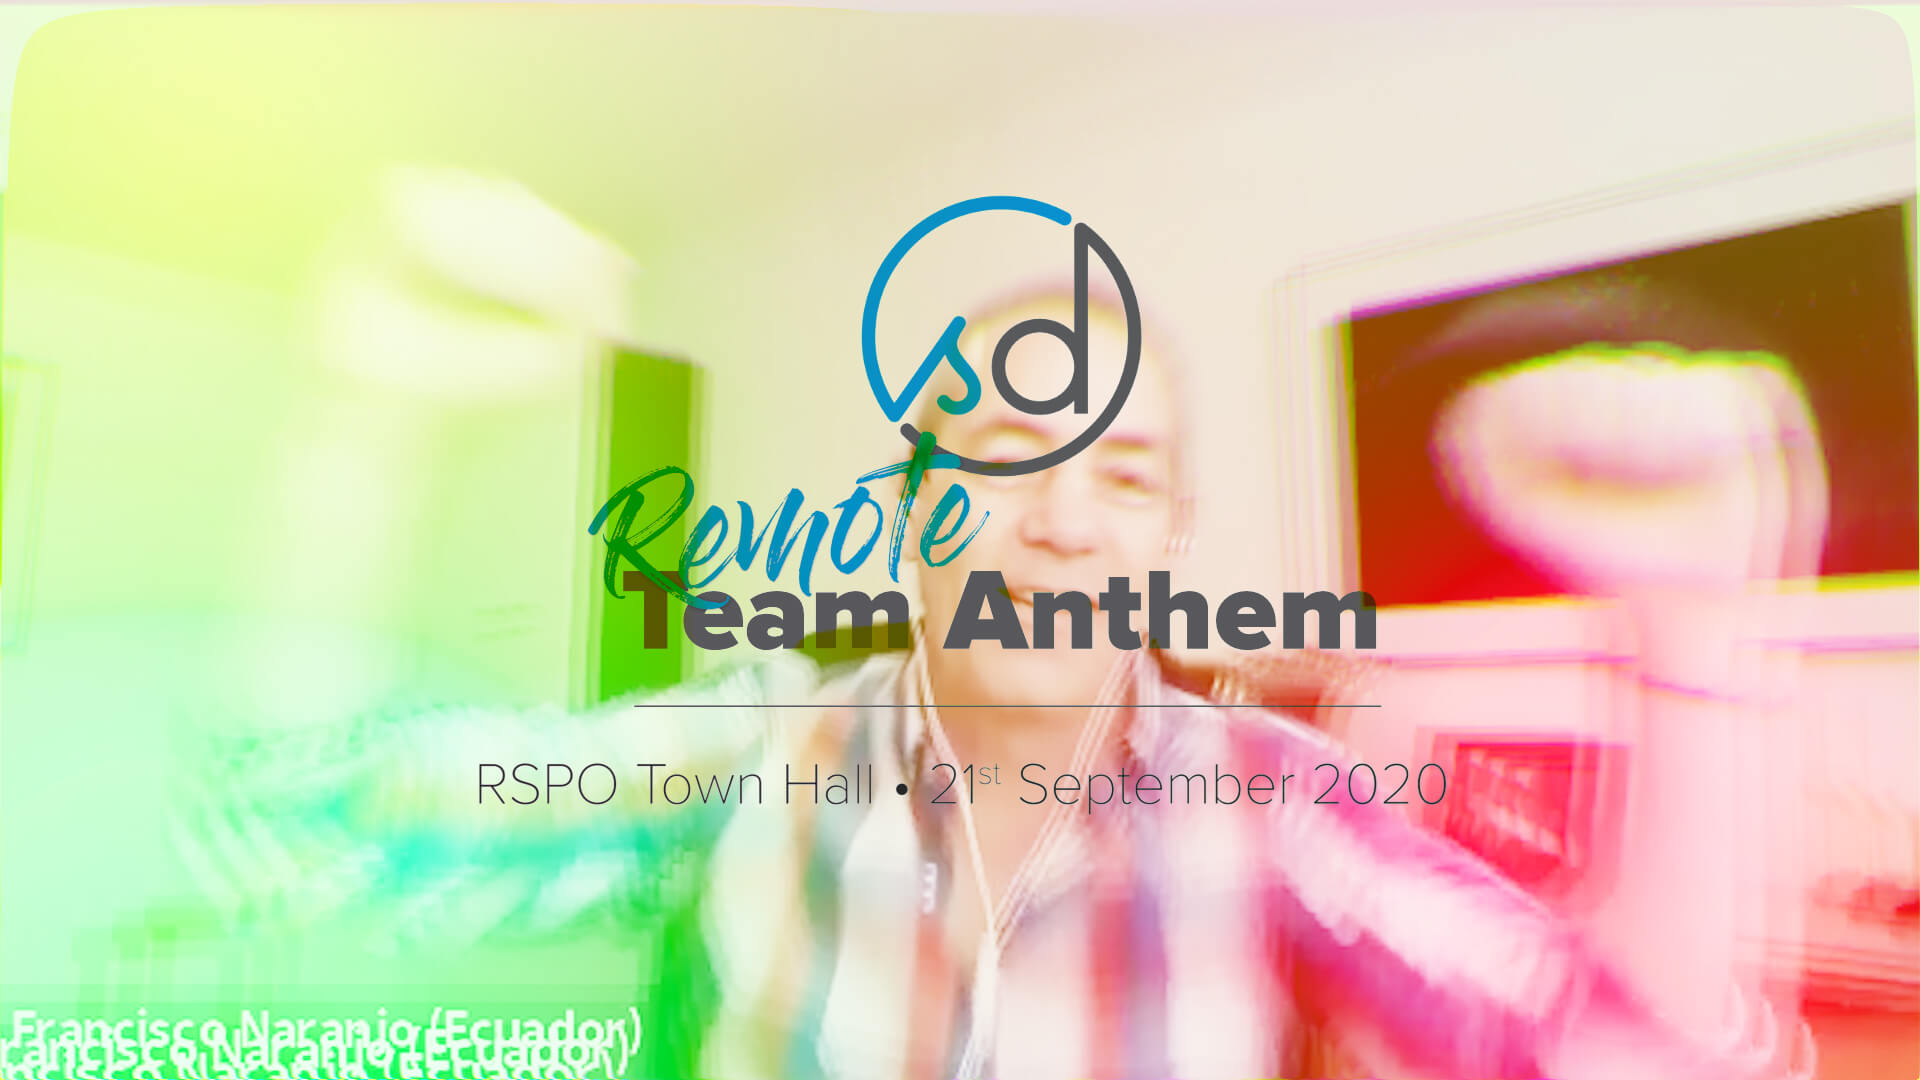 RSPO + Remote Team Anthem